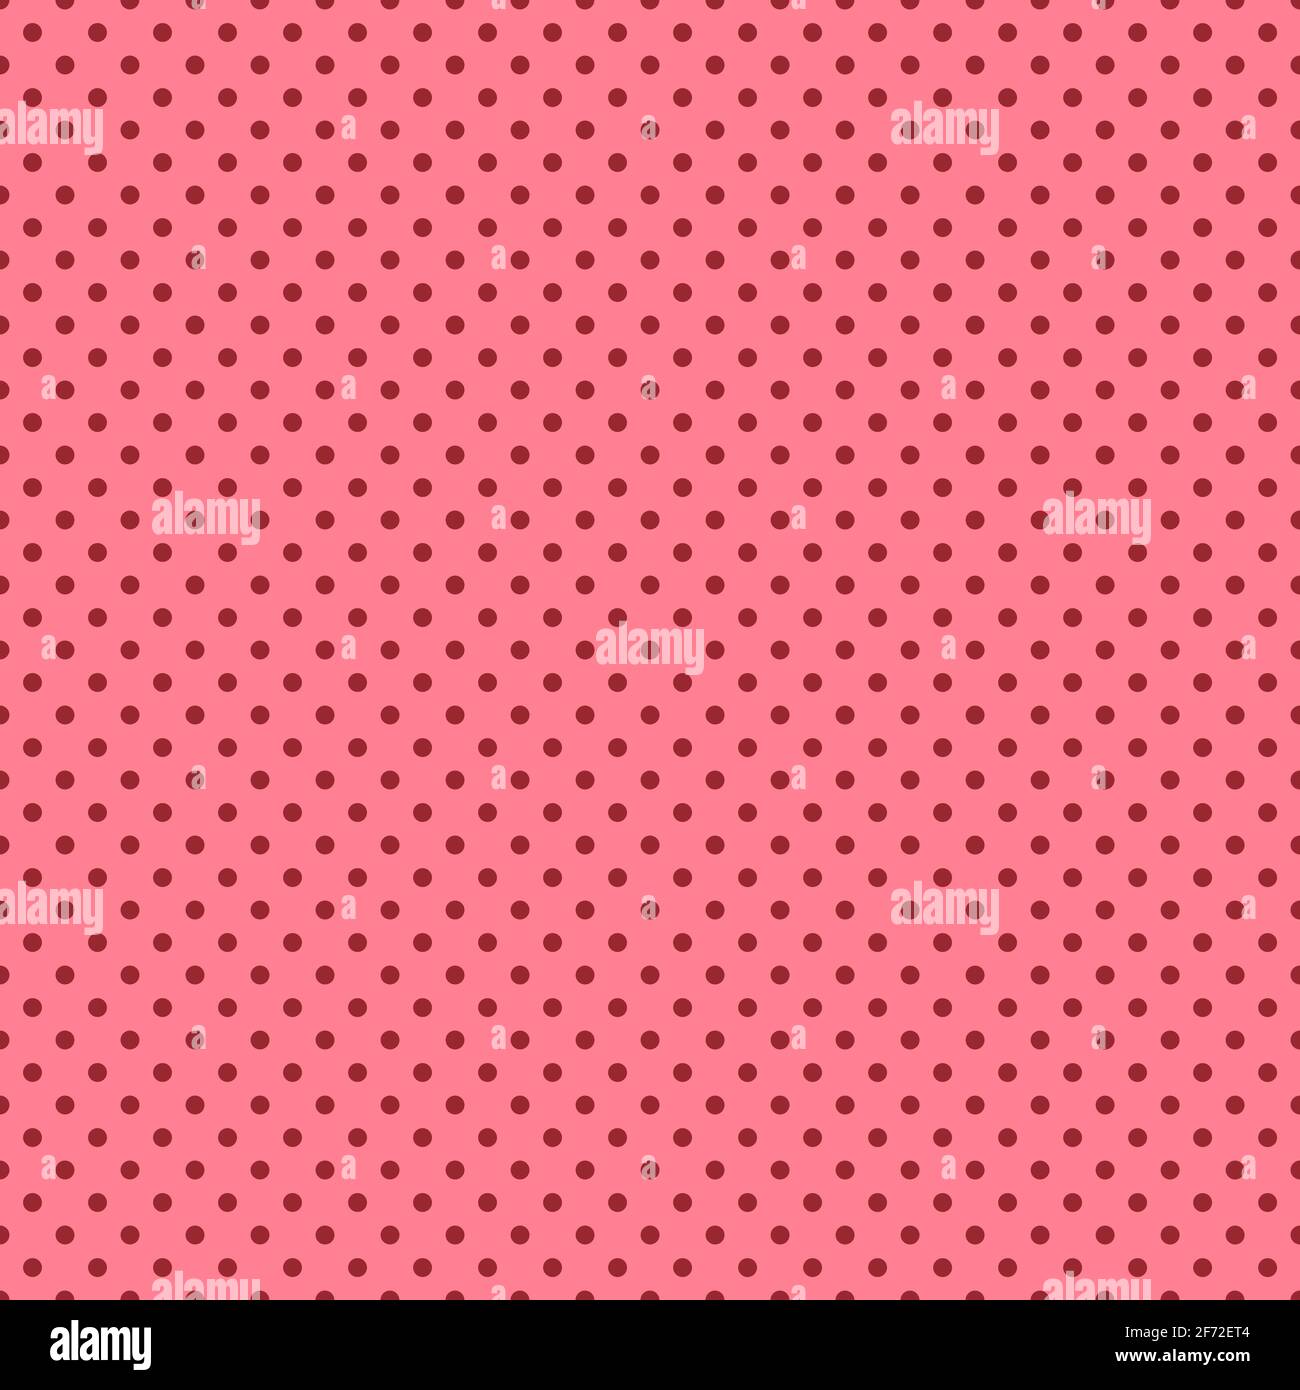 Original polka dots in vanilla pink tones Stock Vector